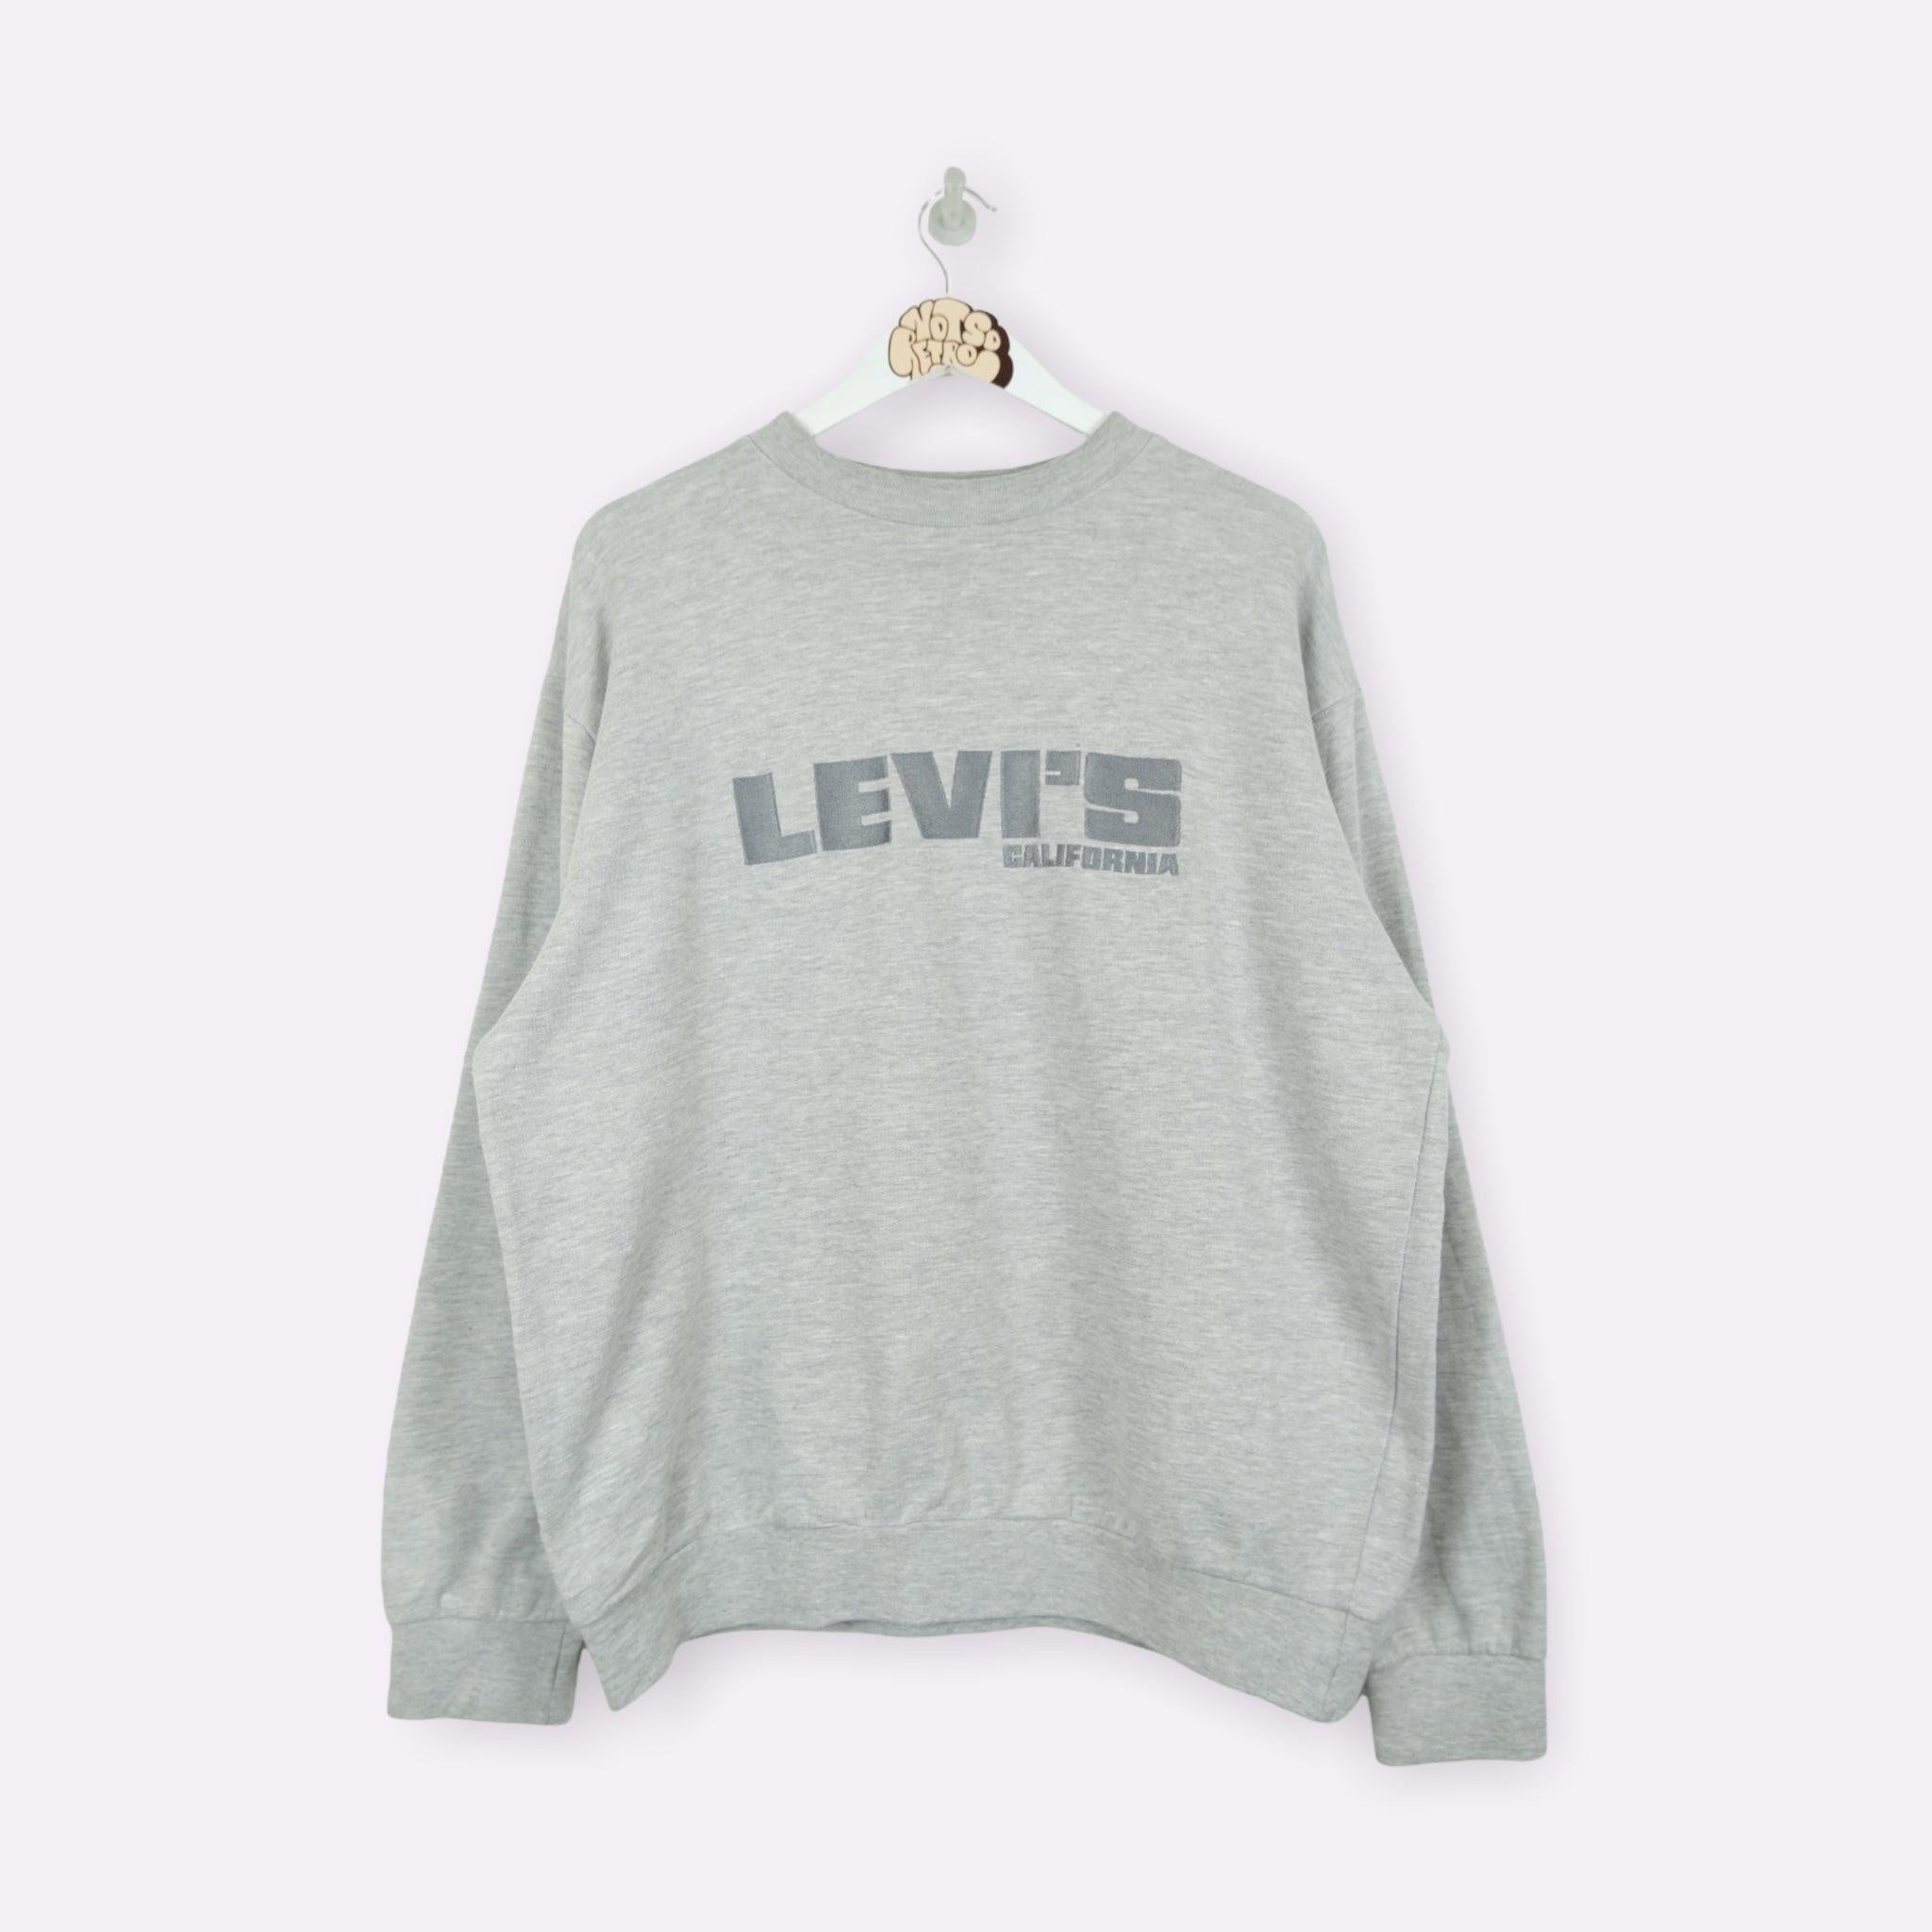 Levi's California Crewneck Sweatshirt Grey Large – Not So Retro